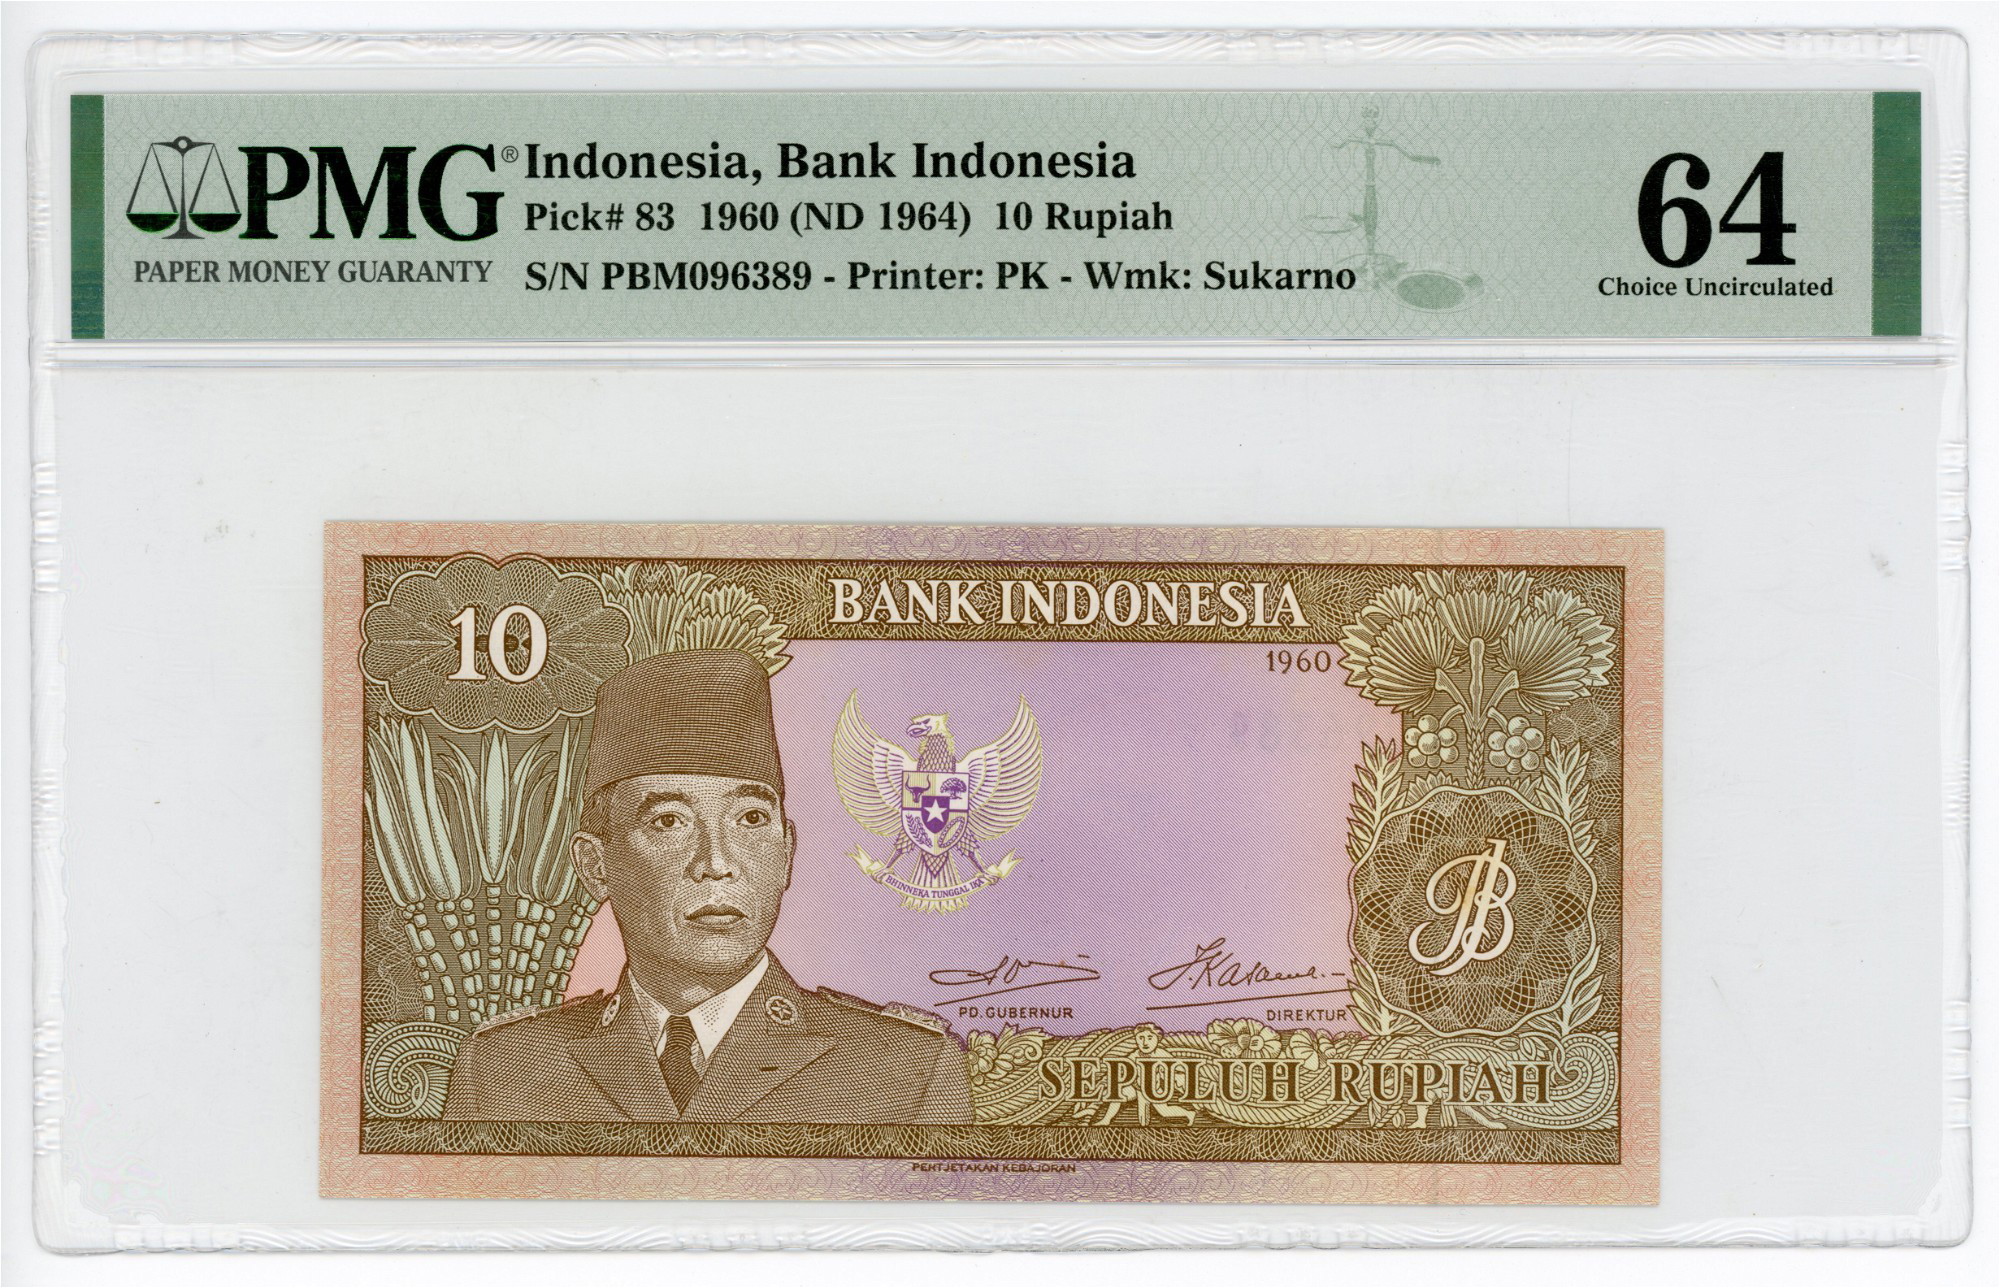 Indonesia 10 Rupiah 1960 (1964) (ND) PMG 64 | Katz Auction